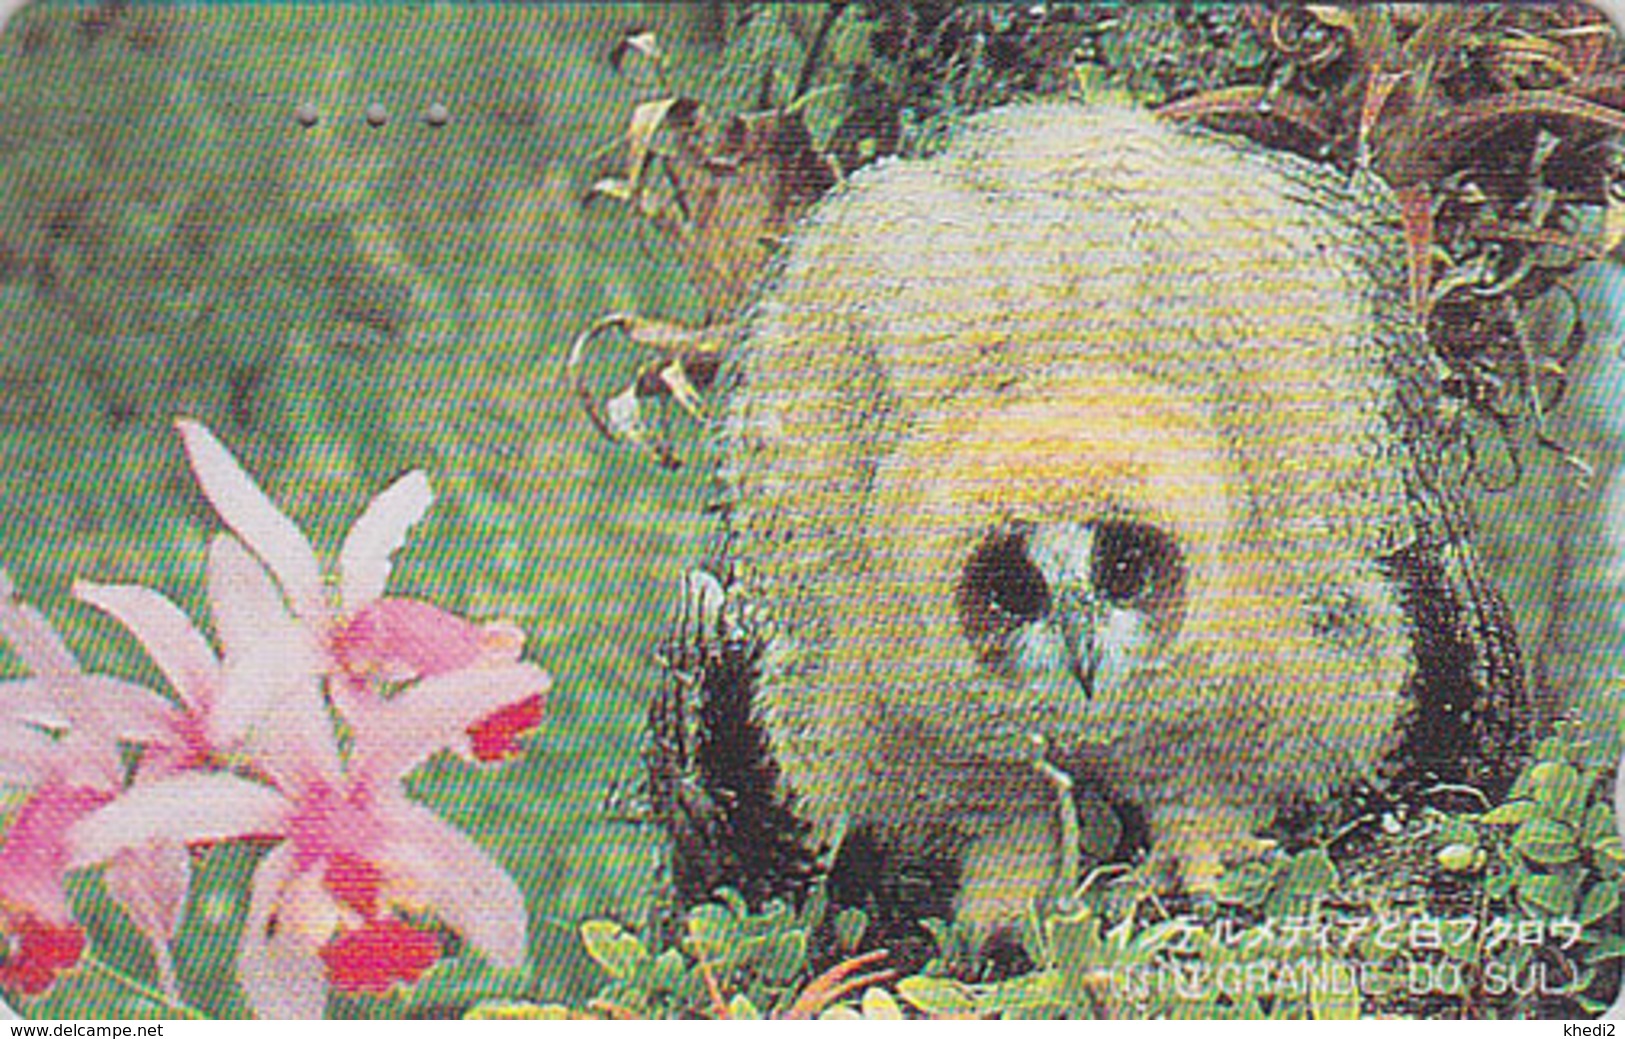 Télécarte Japon / 110-011 - Animal OISEAU - HIBOU & Fleur ORCHIDEE - OWL BIRD & ORCHID Flower Japan Phonecard - 4155 - Eulenvögel